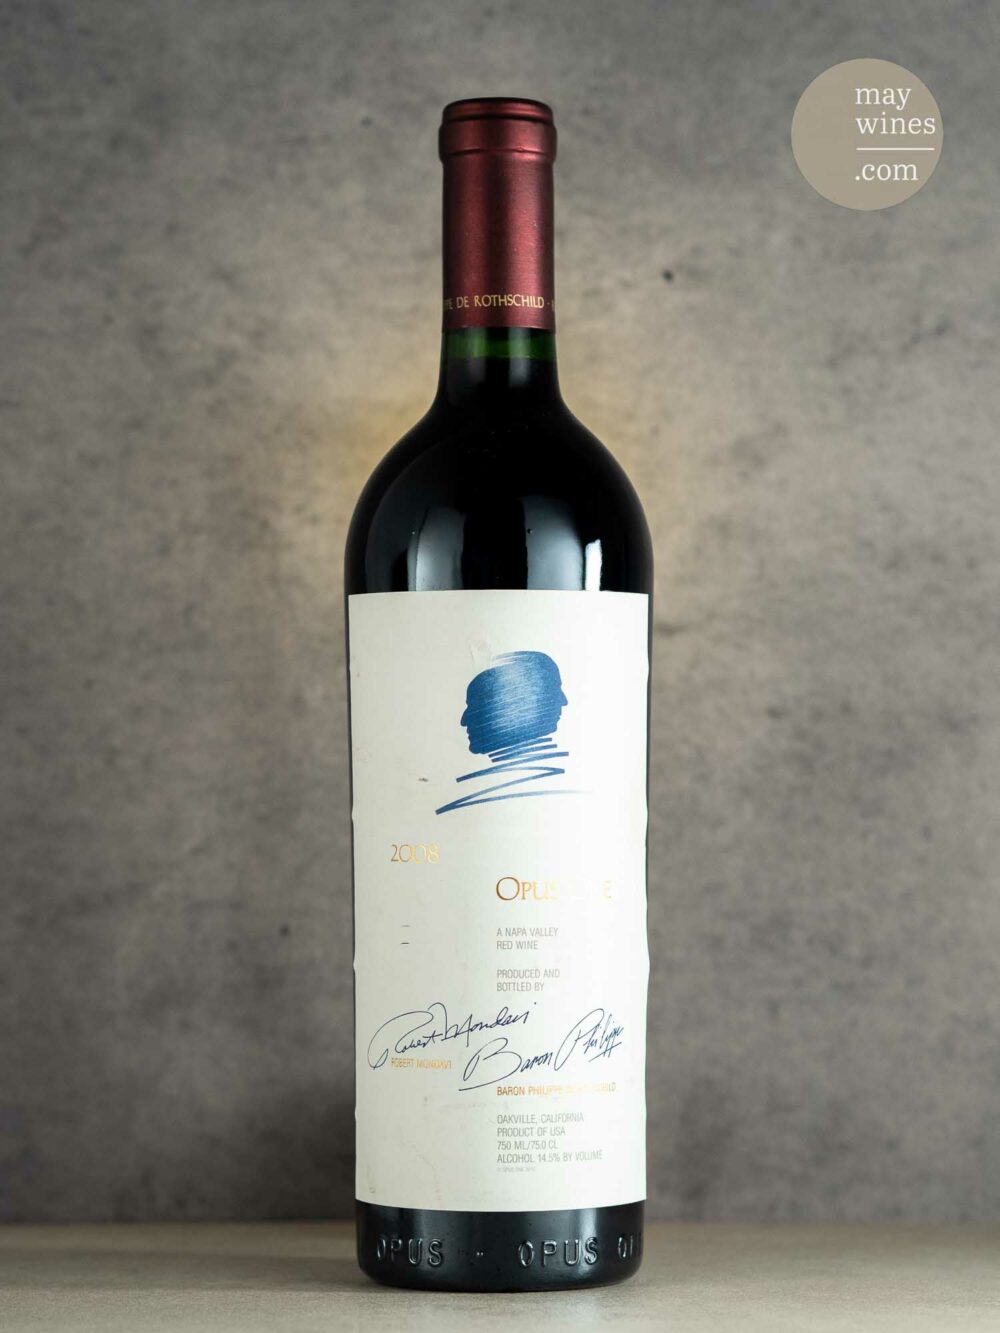 May Wines – Rotwein – 2008 Opus One - Mondavi & Rothschild